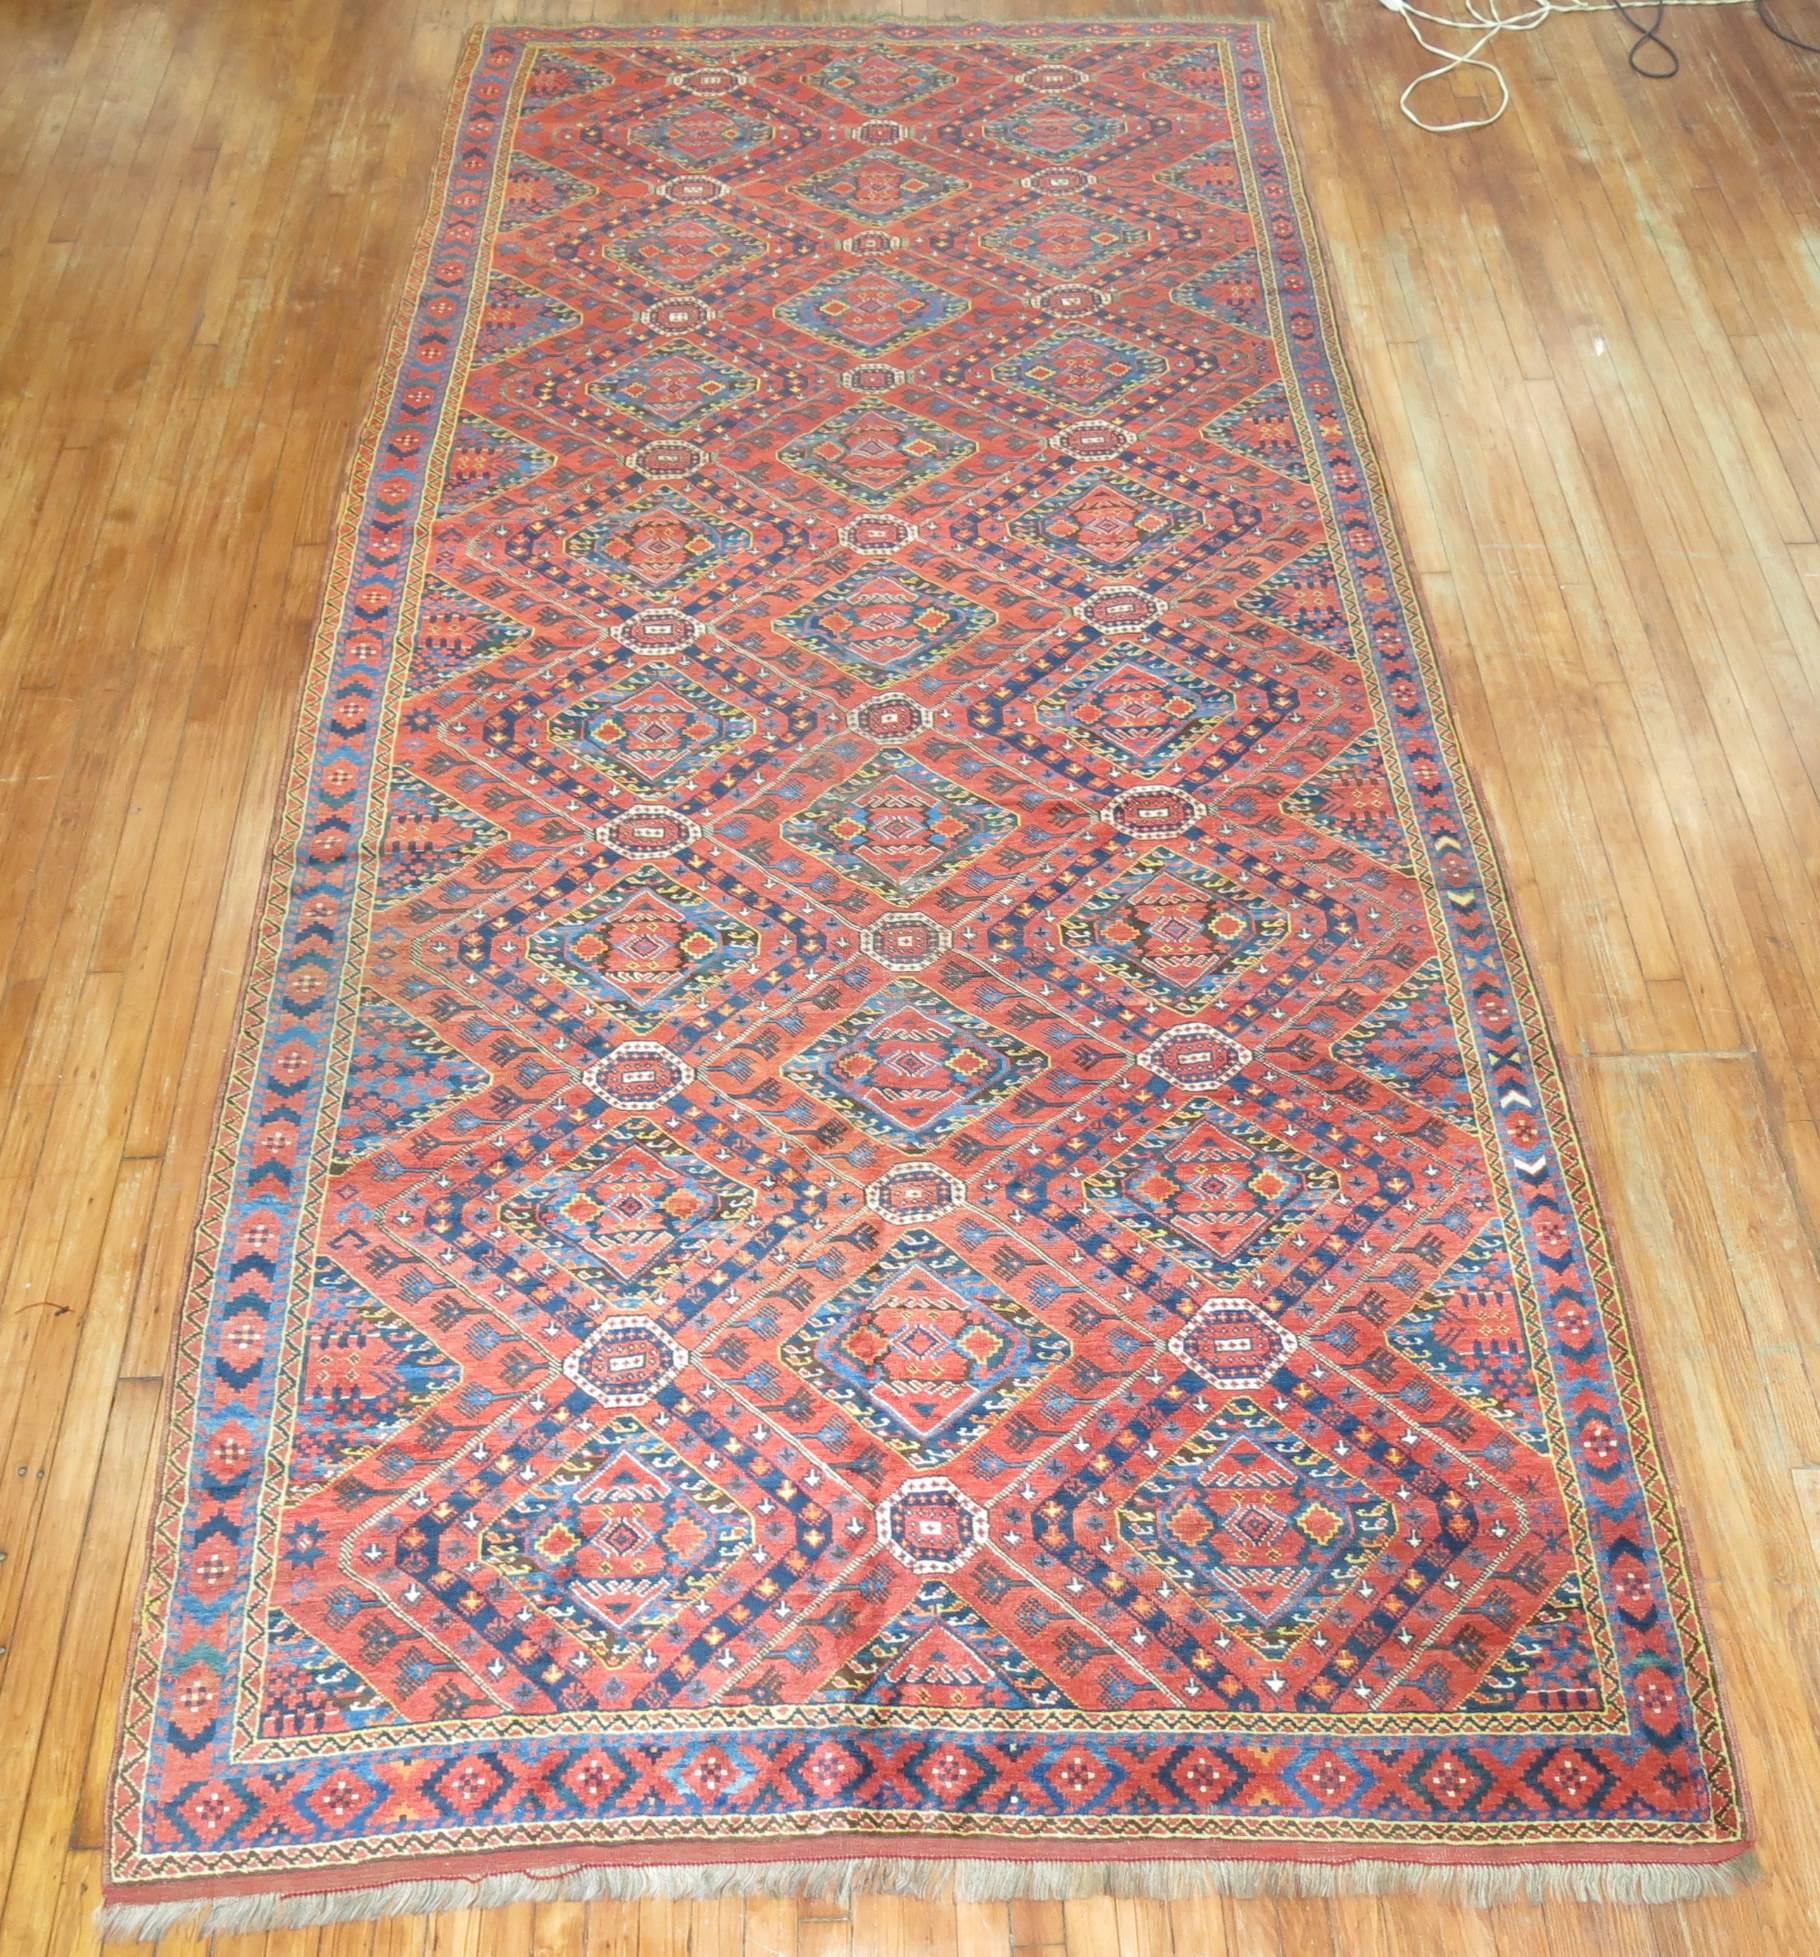 Rustic Gallery SizeAntique Beshir Carpet For Sale 1